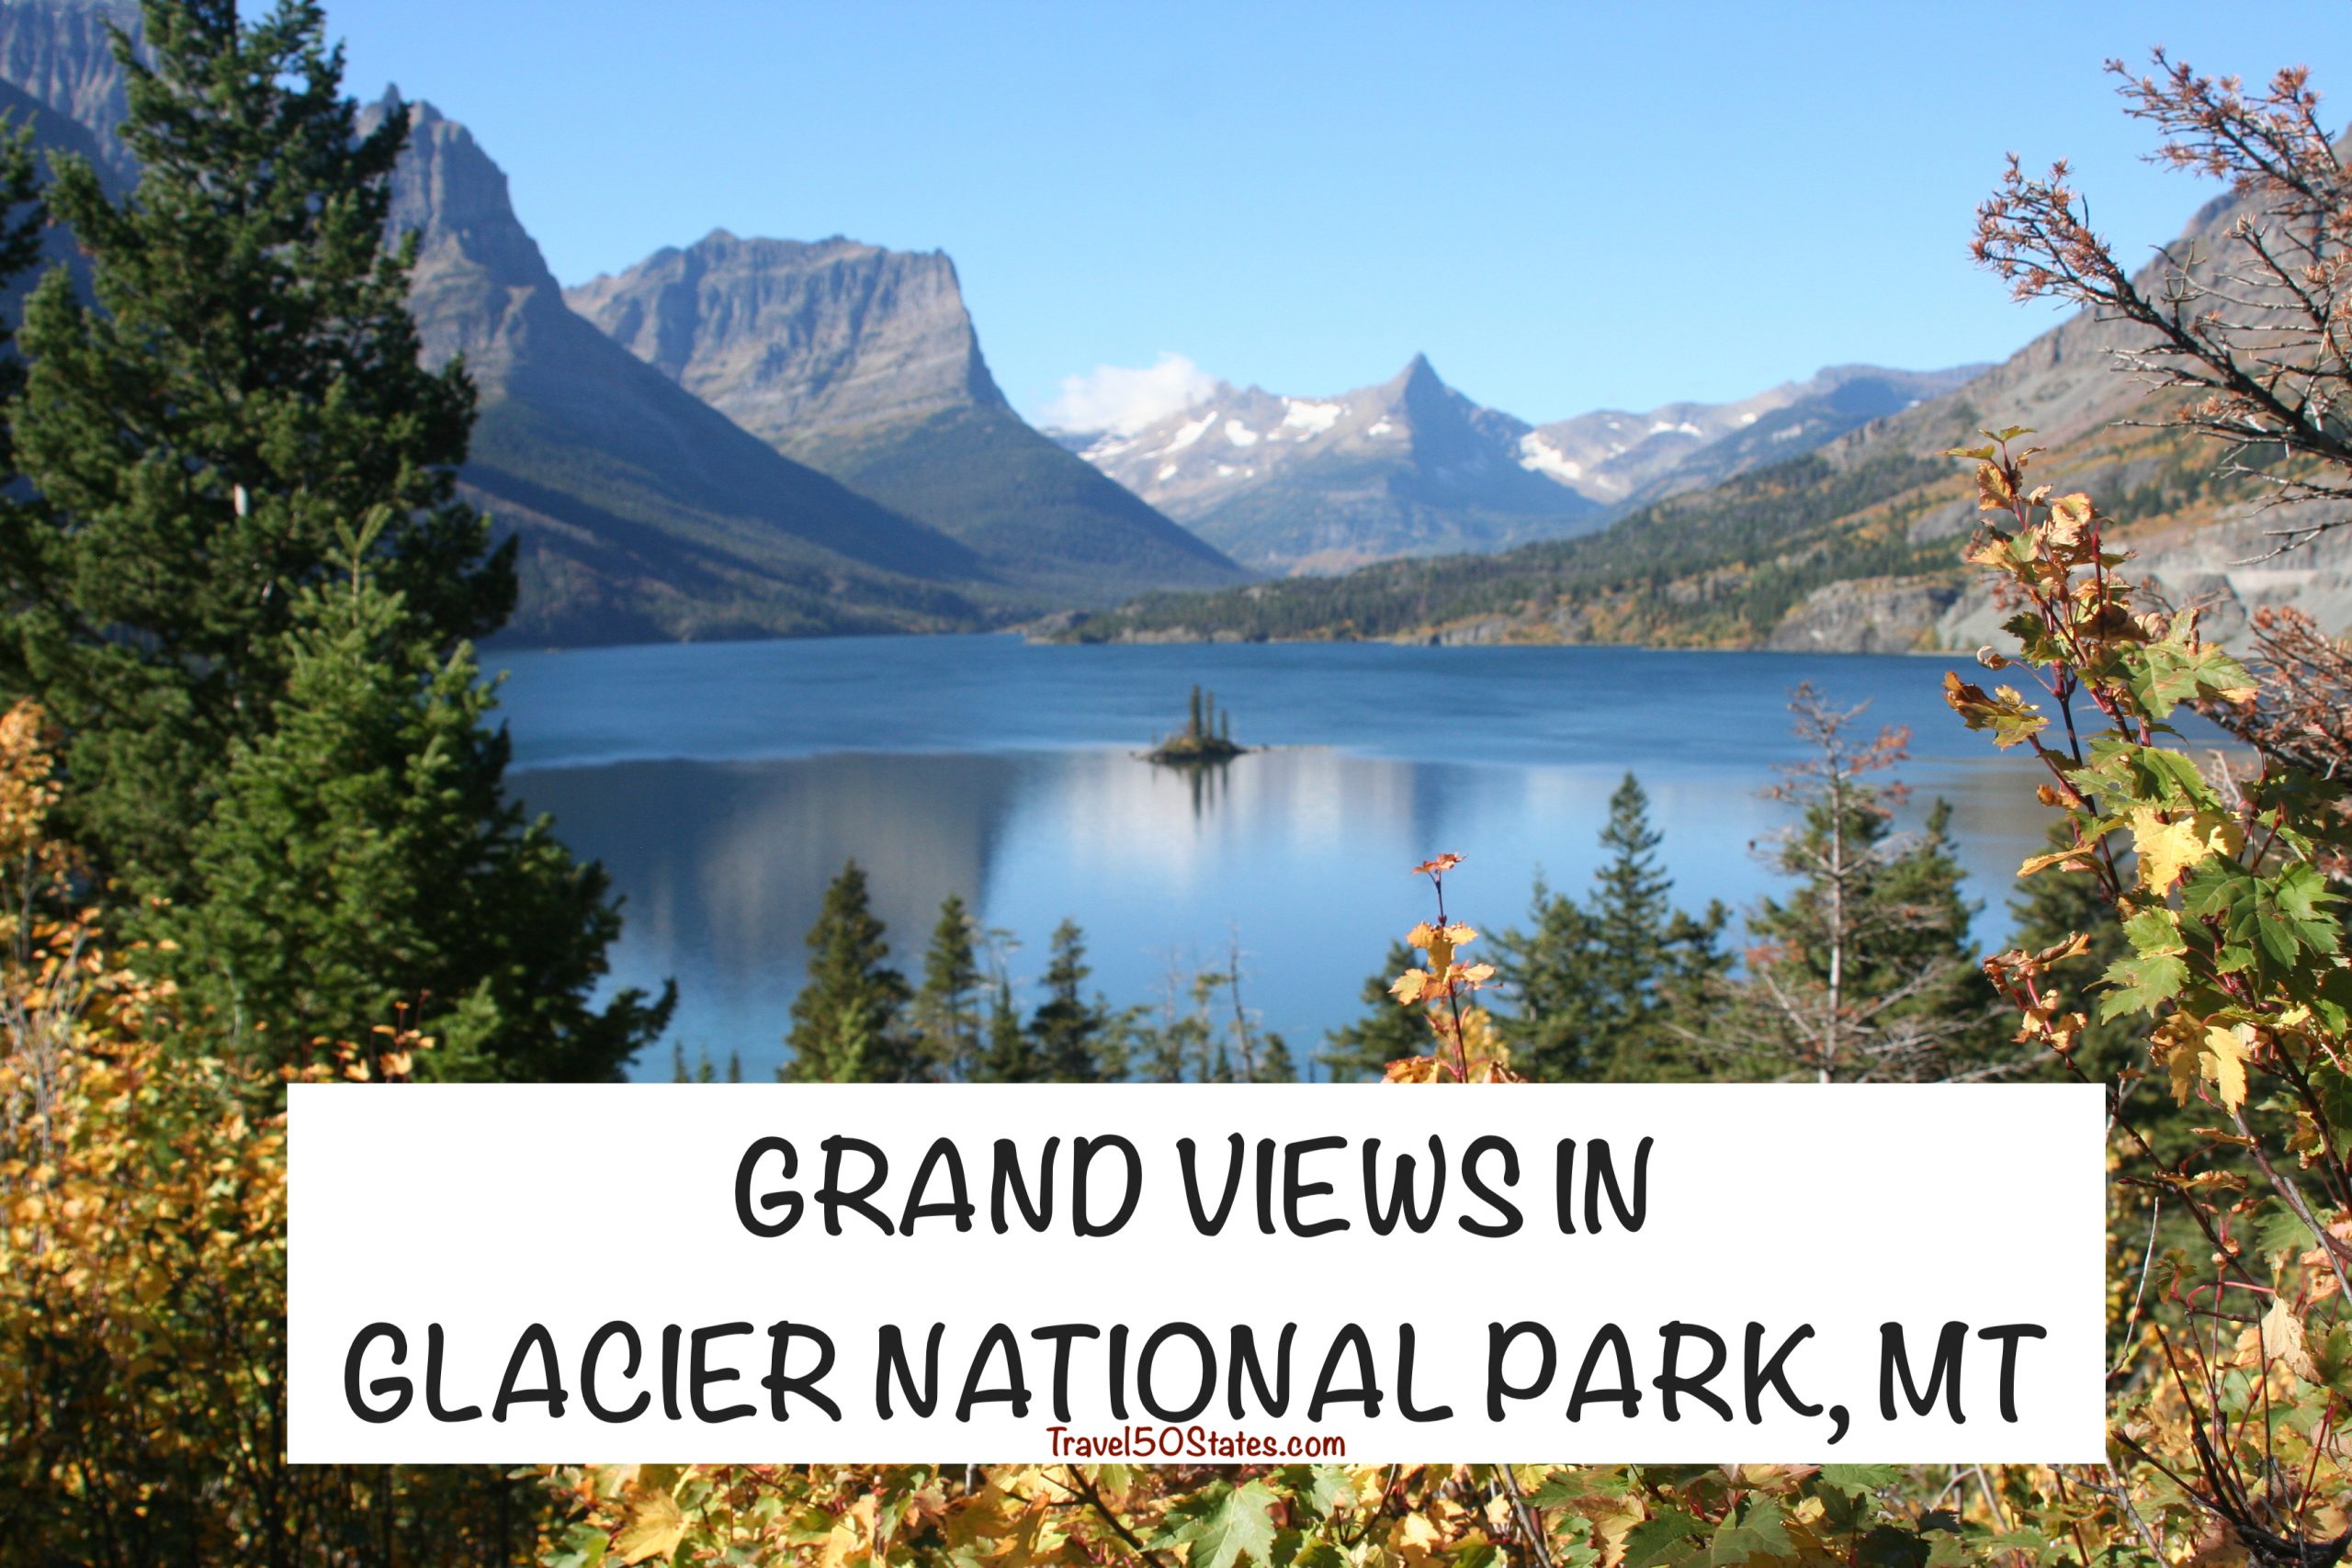 Grand Views in Glacier National Park, Montana